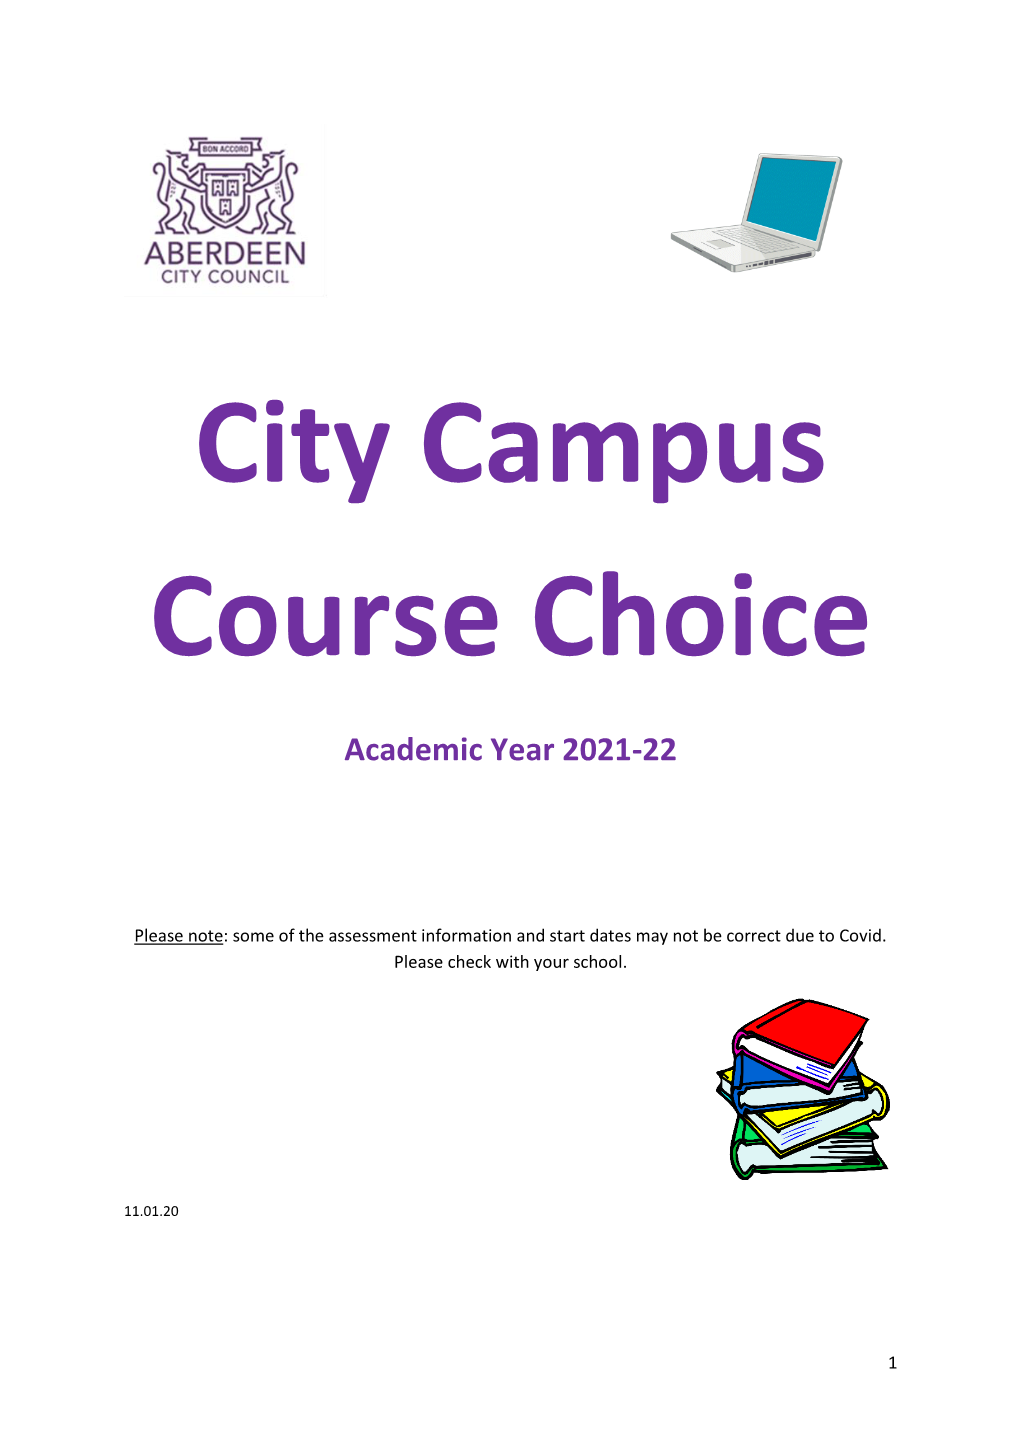 City Campus Course Choice